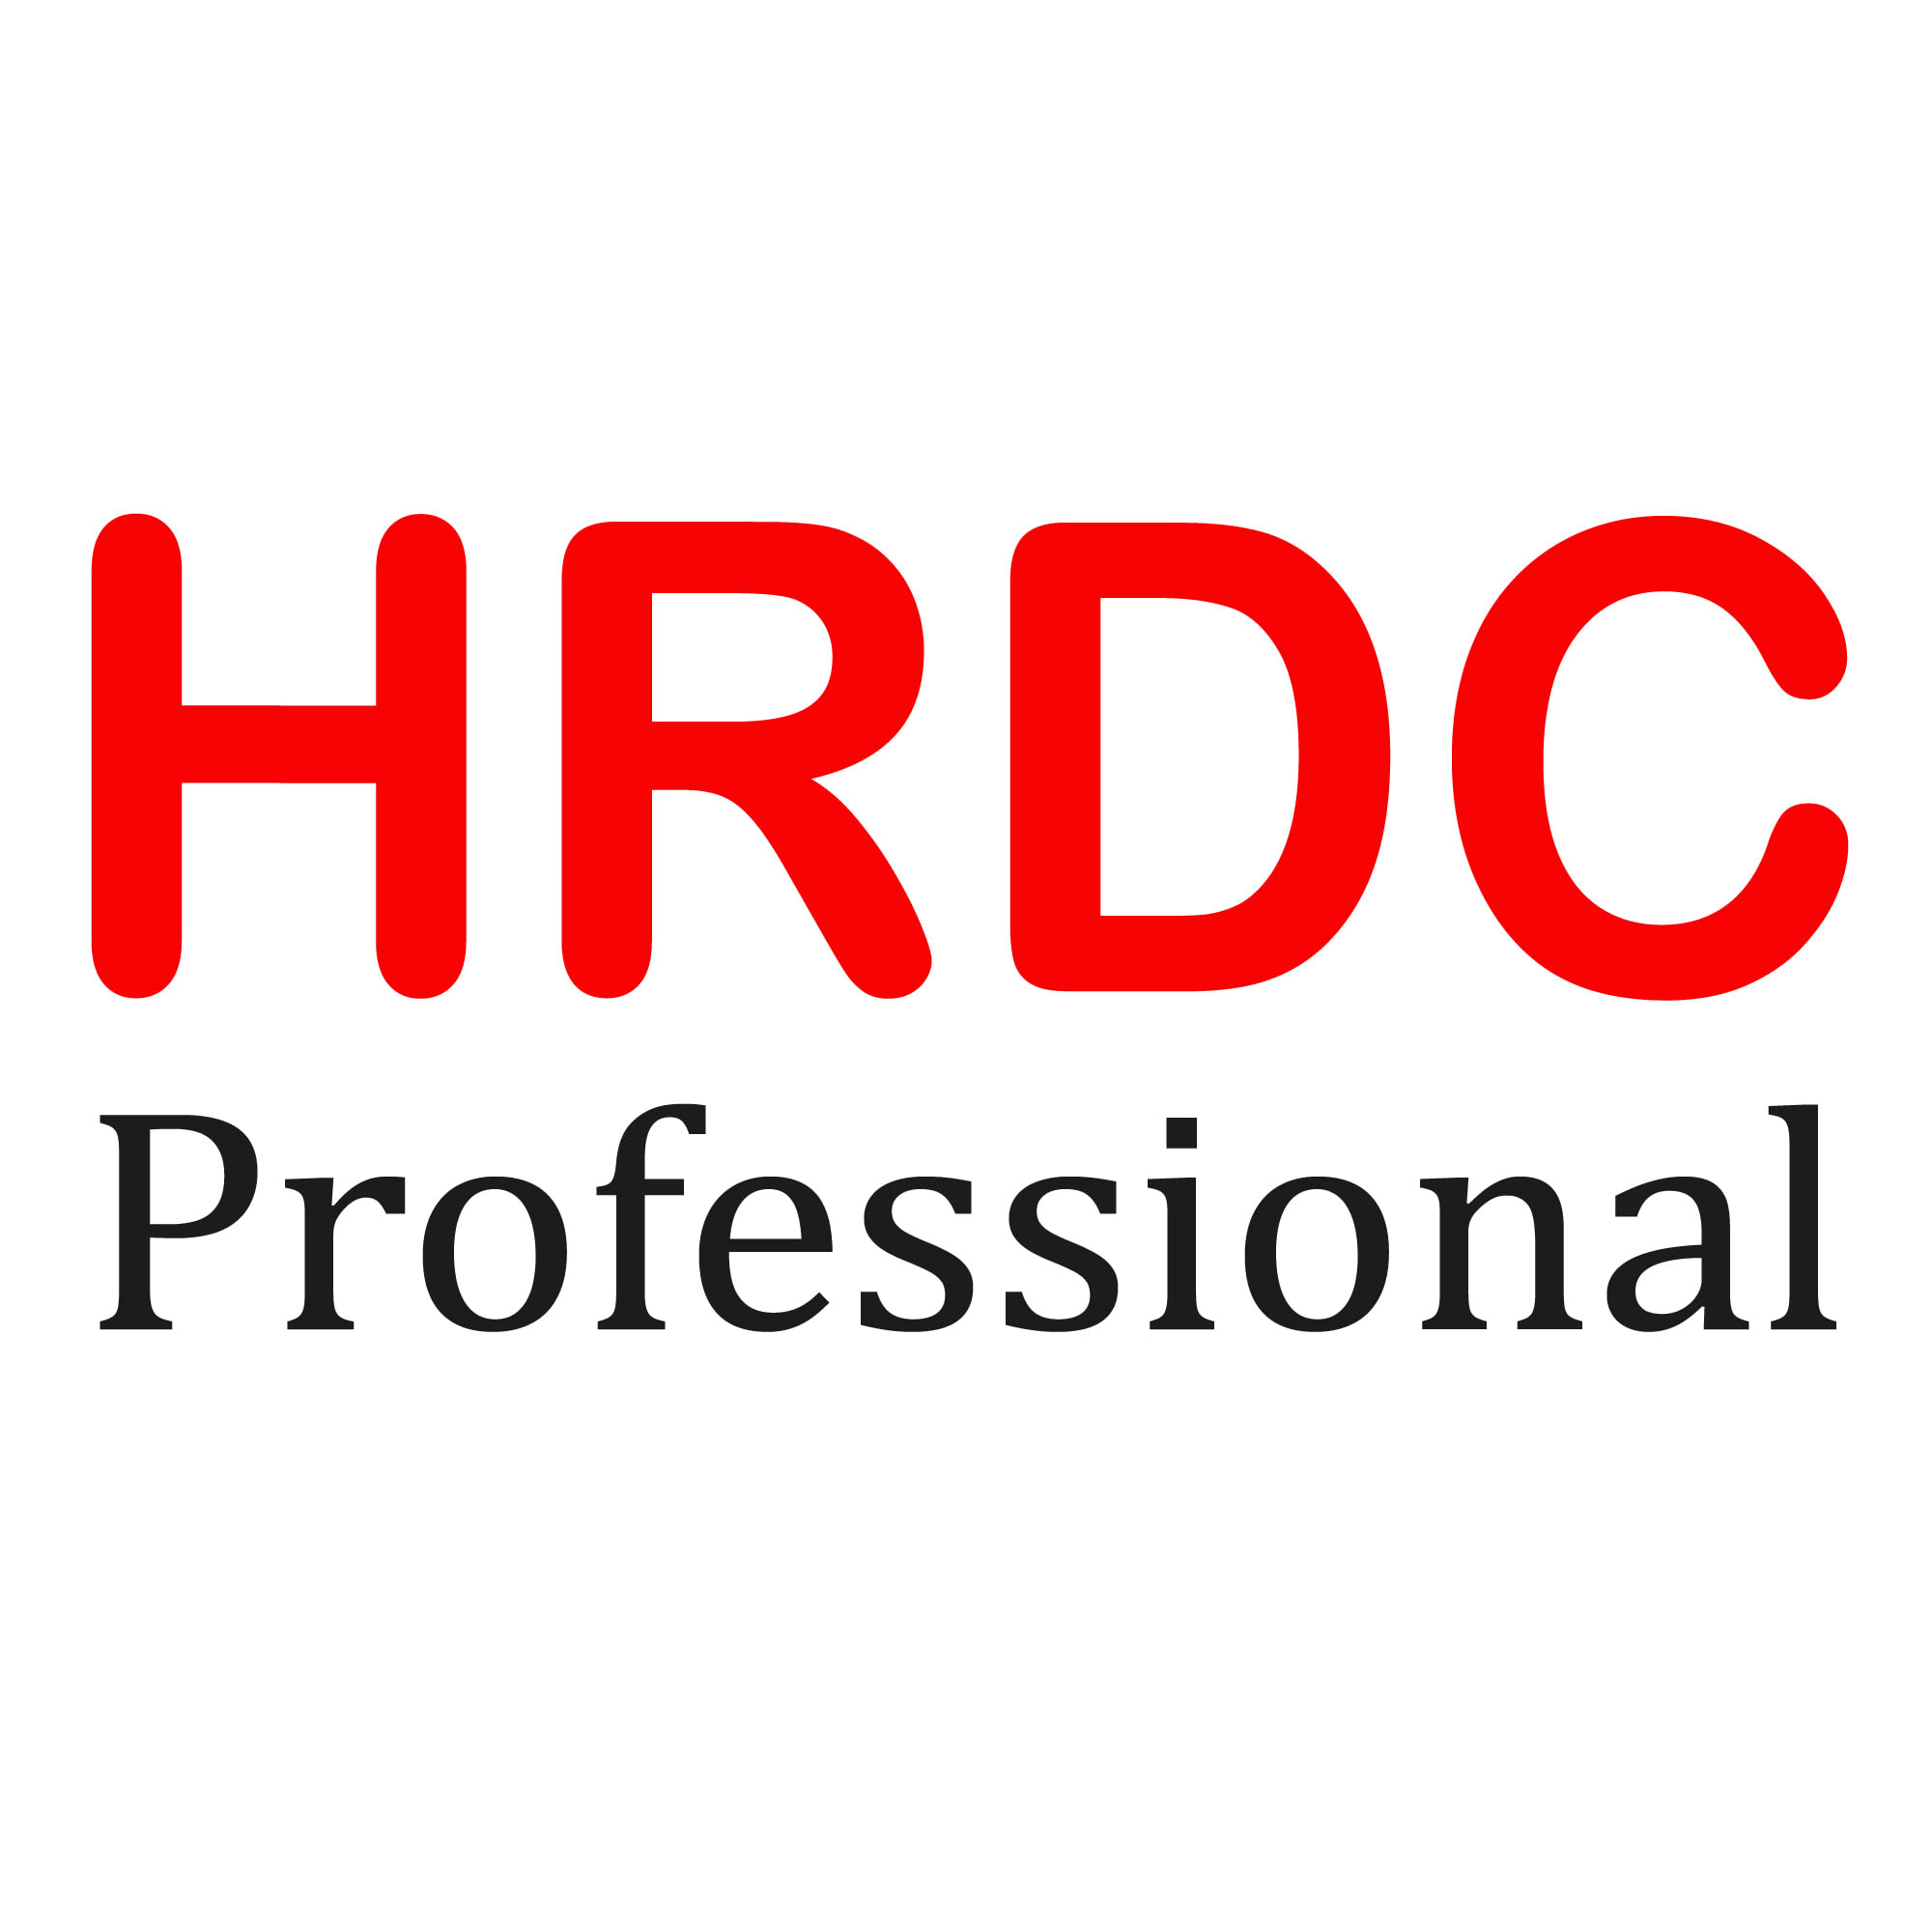 HRDC Professional